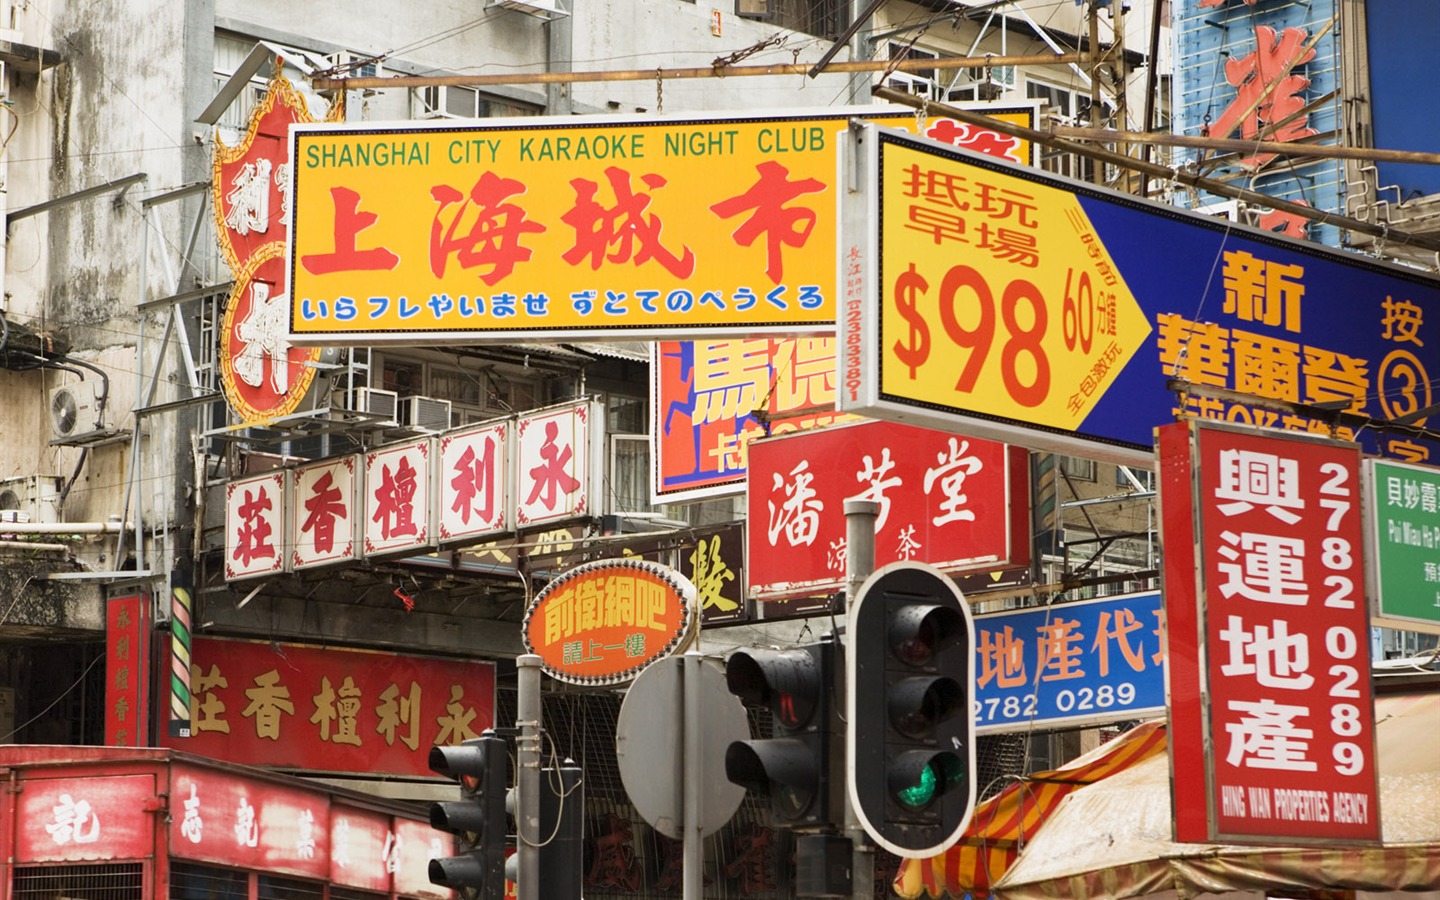 Glimpse of China's urban wallpaper #4 - 1440x900